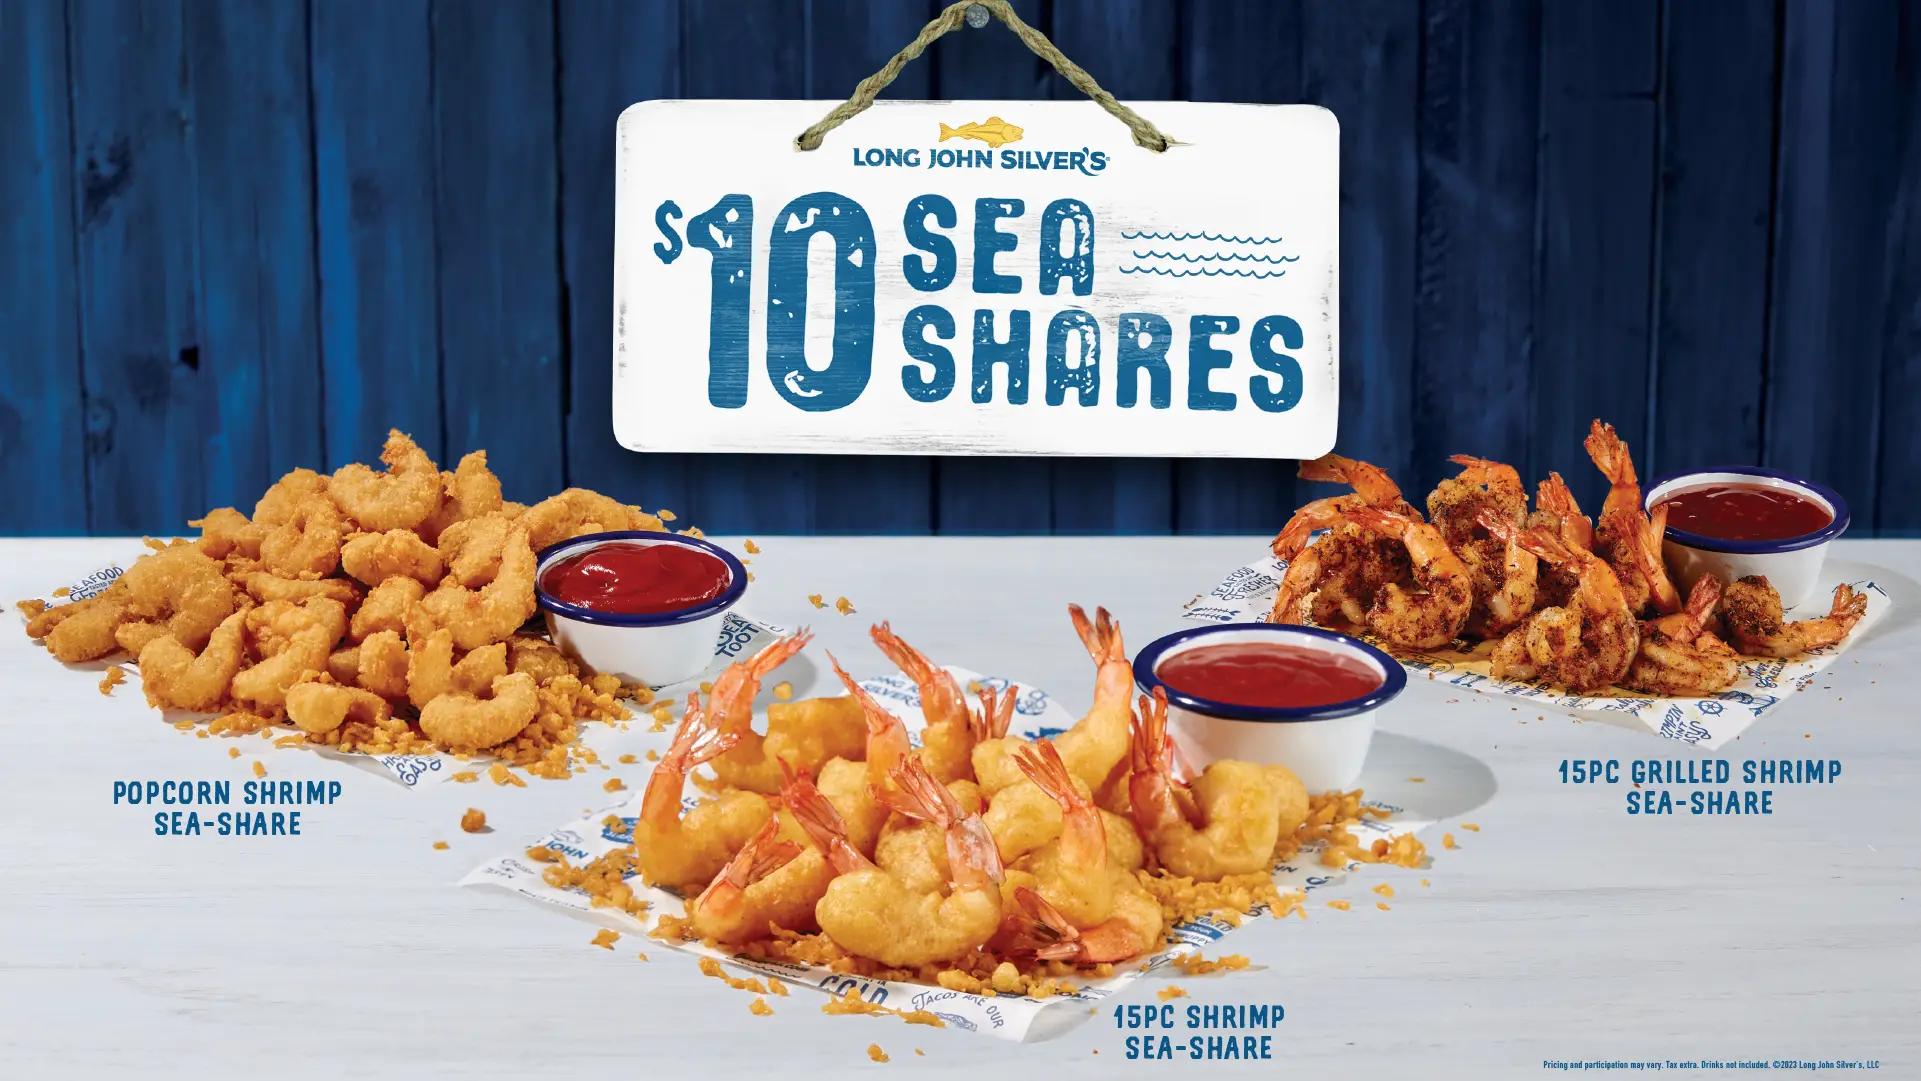 Long John Silver's $10 Shrimp Sea Shares